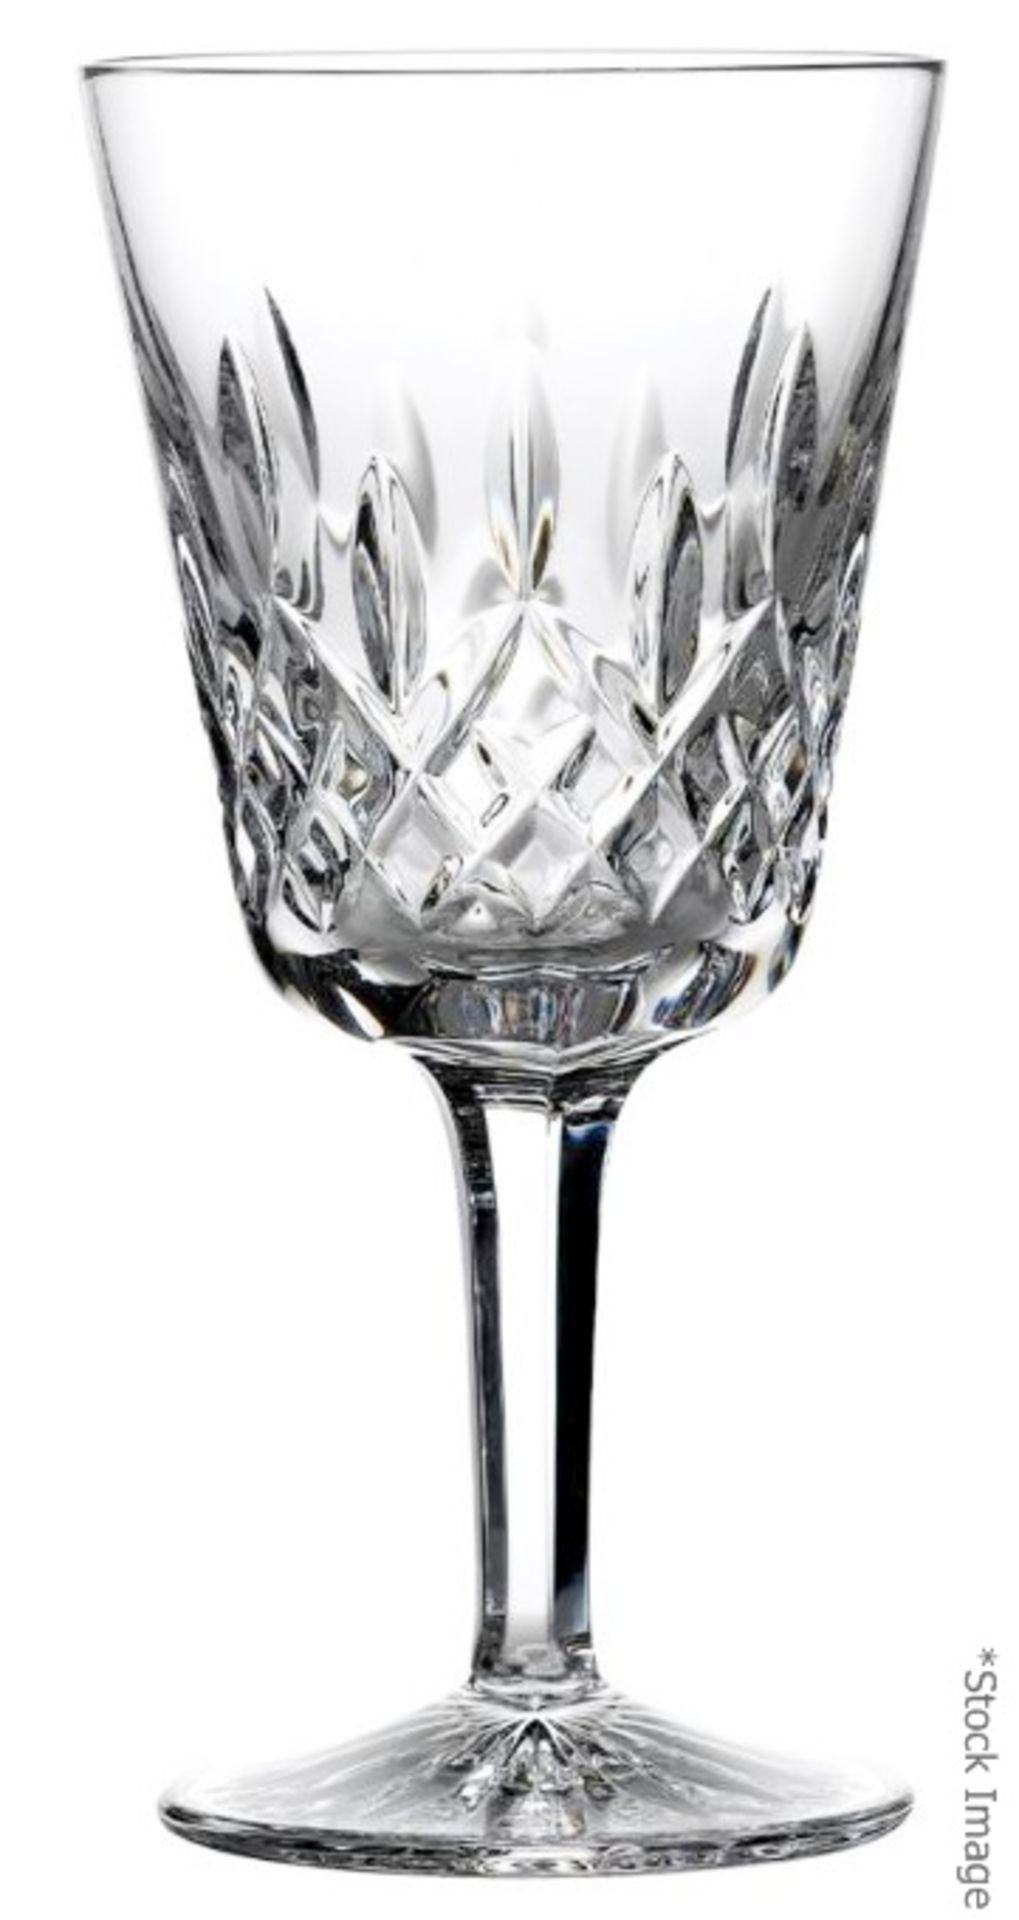 1 x Waterford 'Lismore' Crystal Goblet (215ml) - Dimensions: H17.5cm x W8.5cm x D8.5cm approx - Ref: